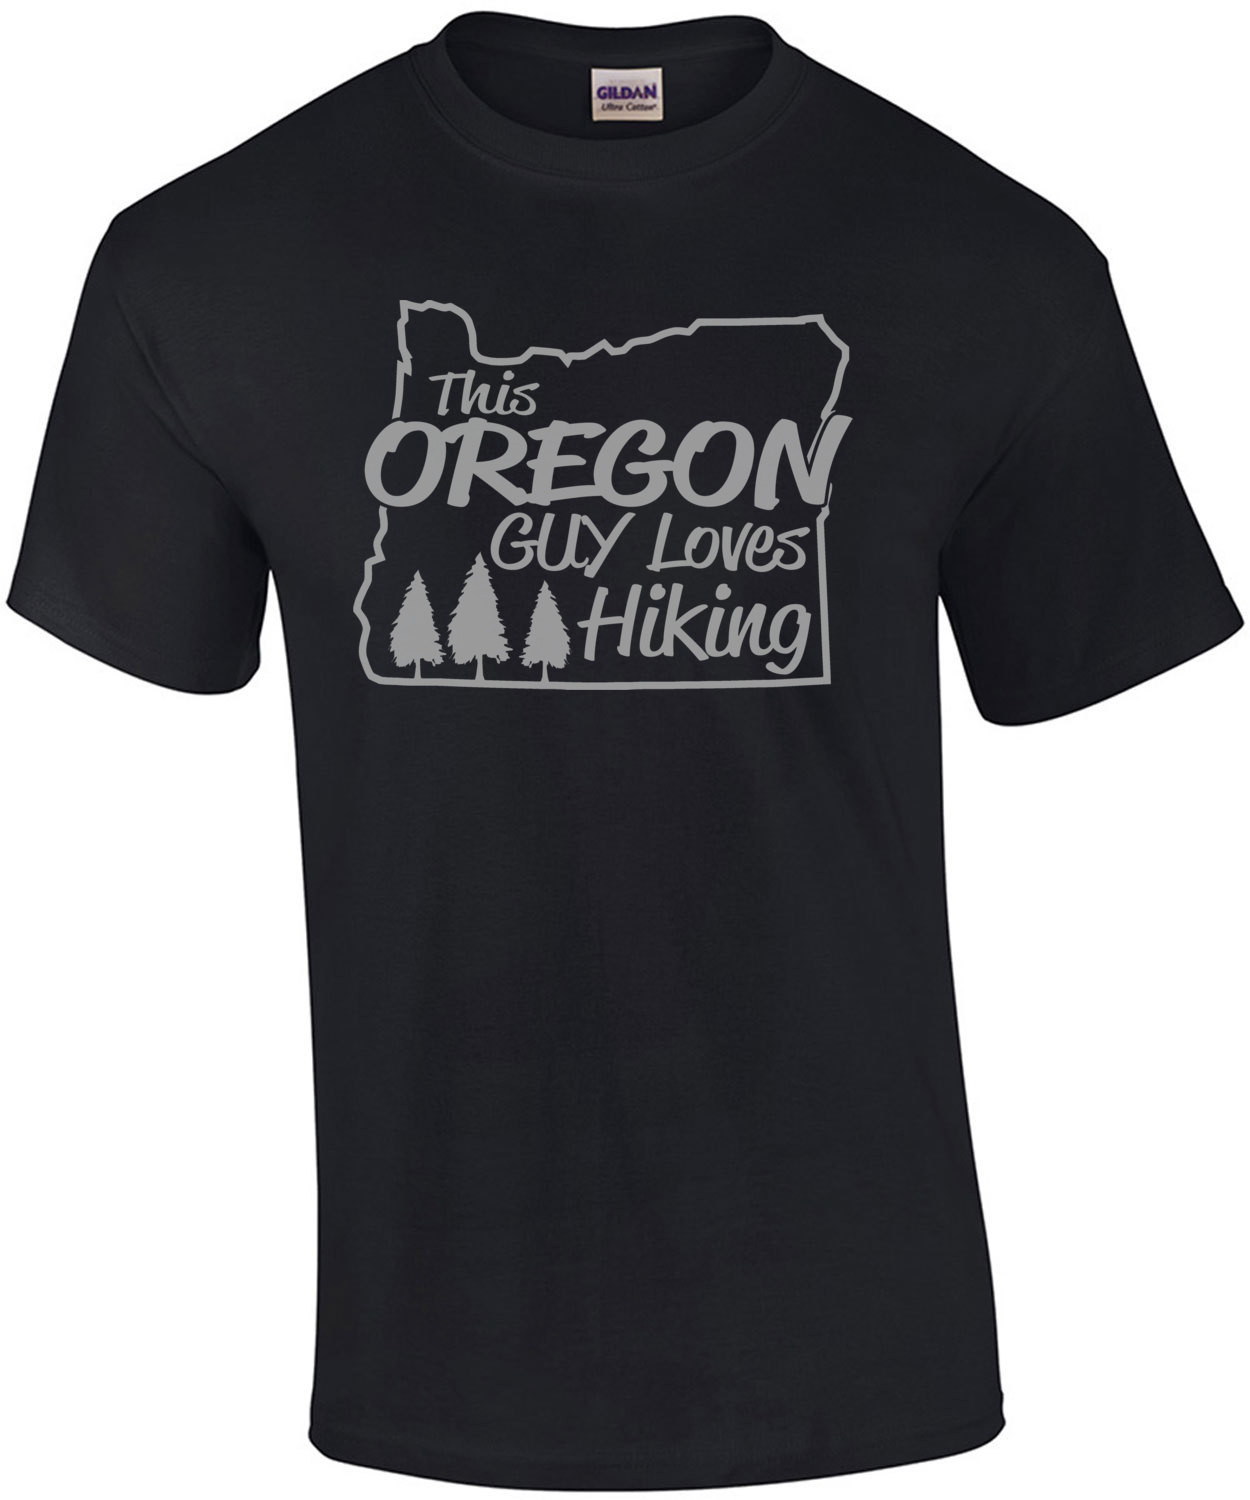 This Oregon Guy Loves Hiking T-Shirt